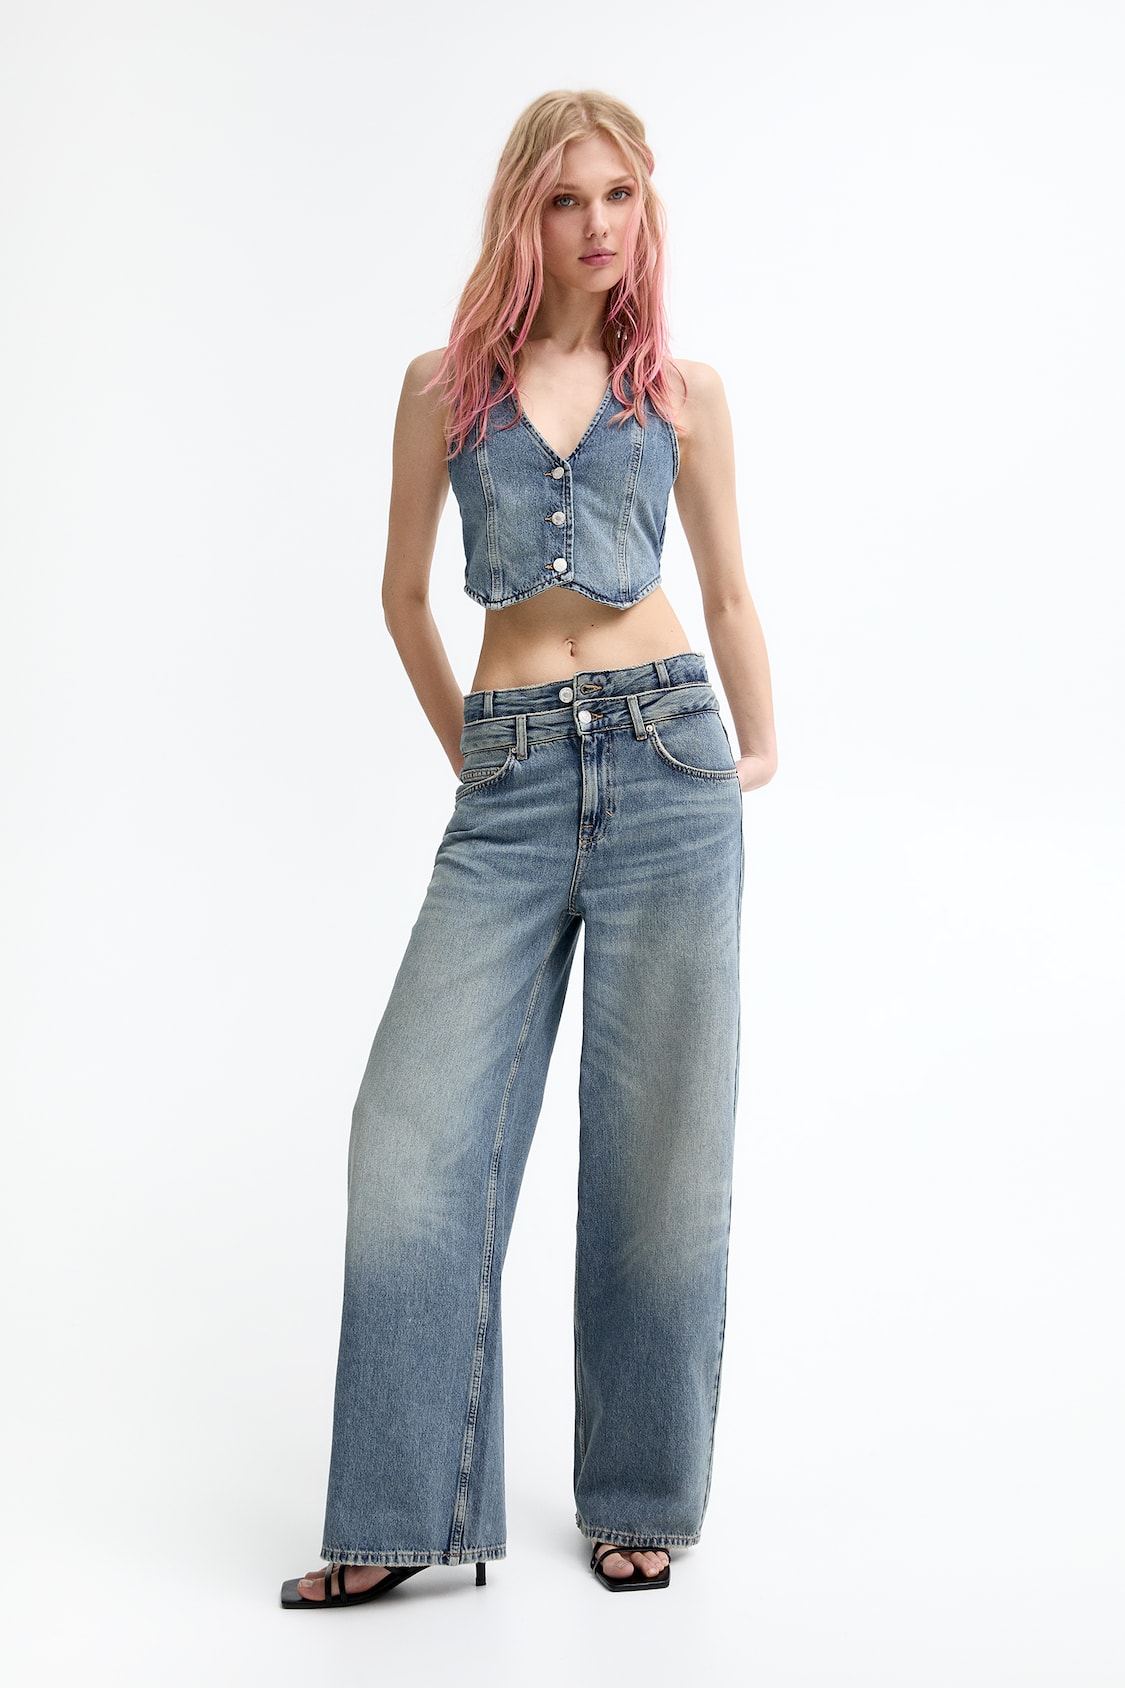 Zara Double Waist Jeans.